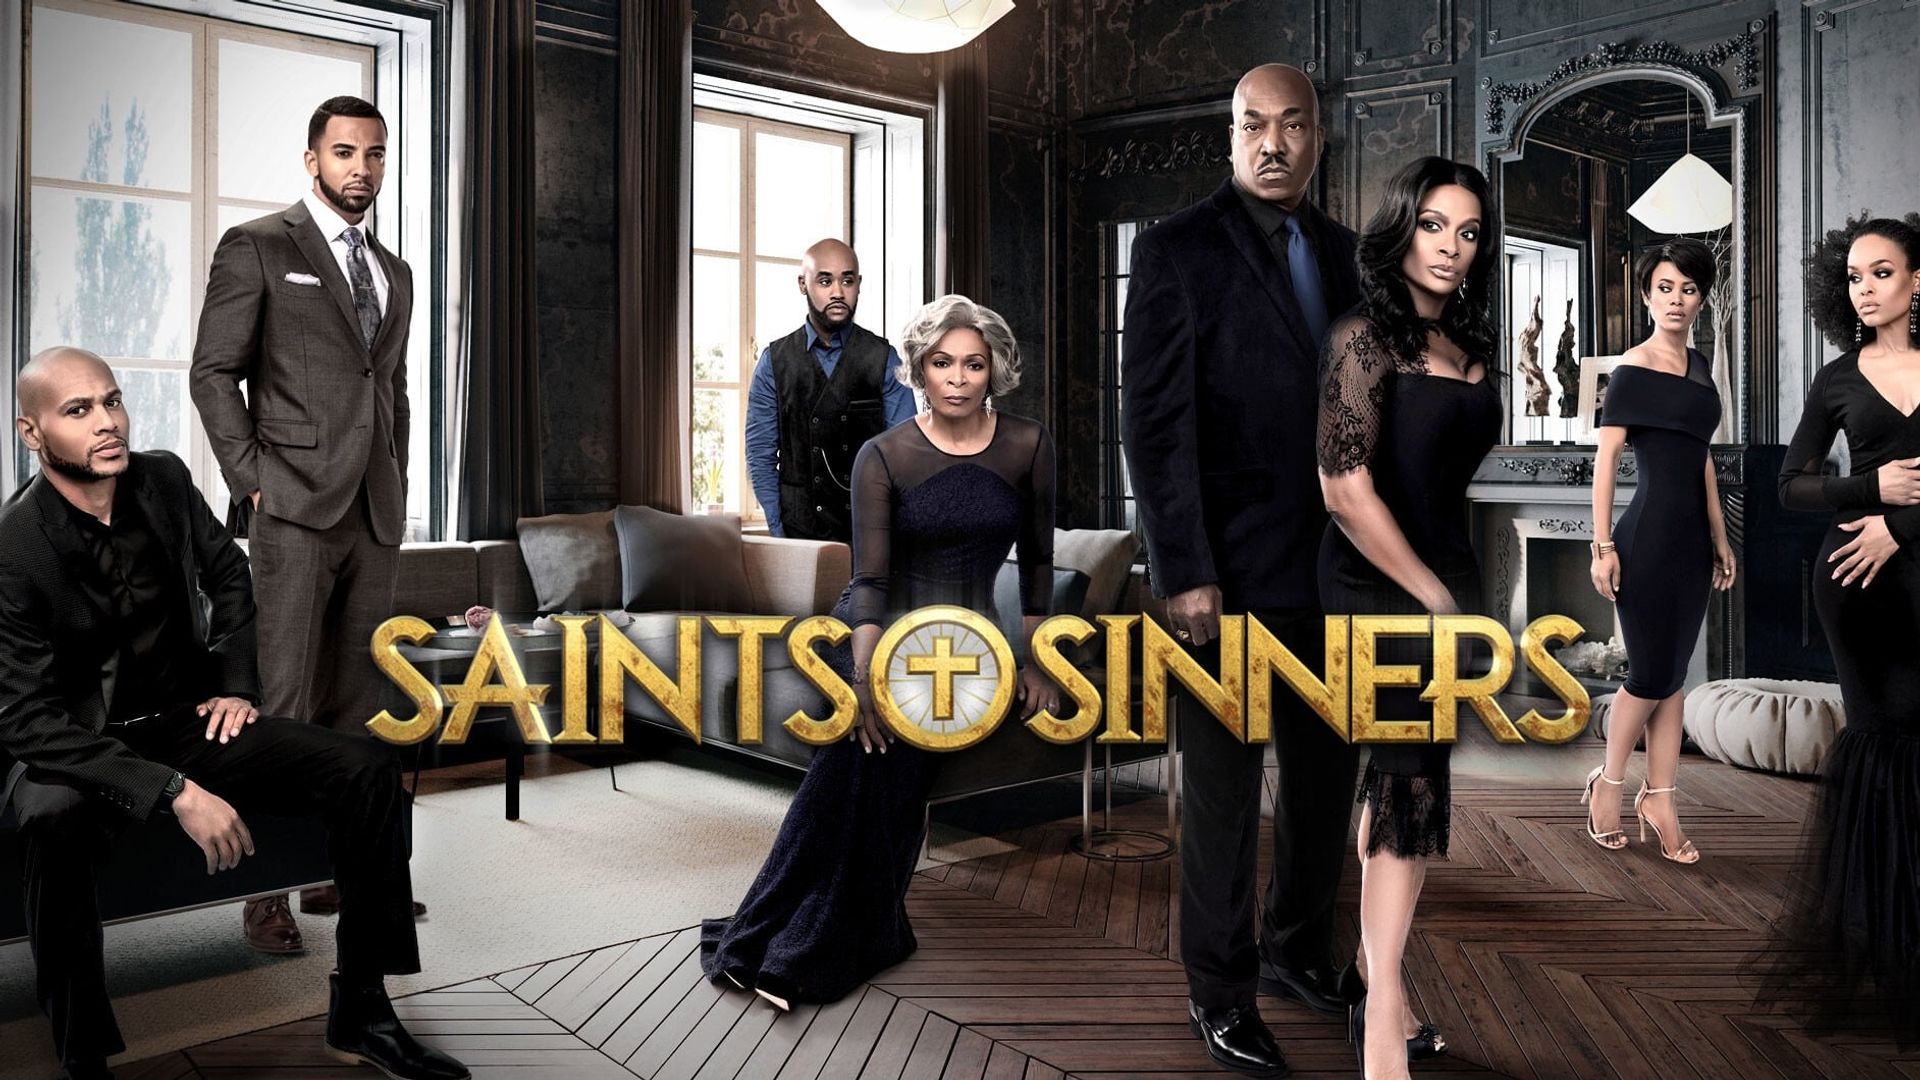 Saints & Sinners background